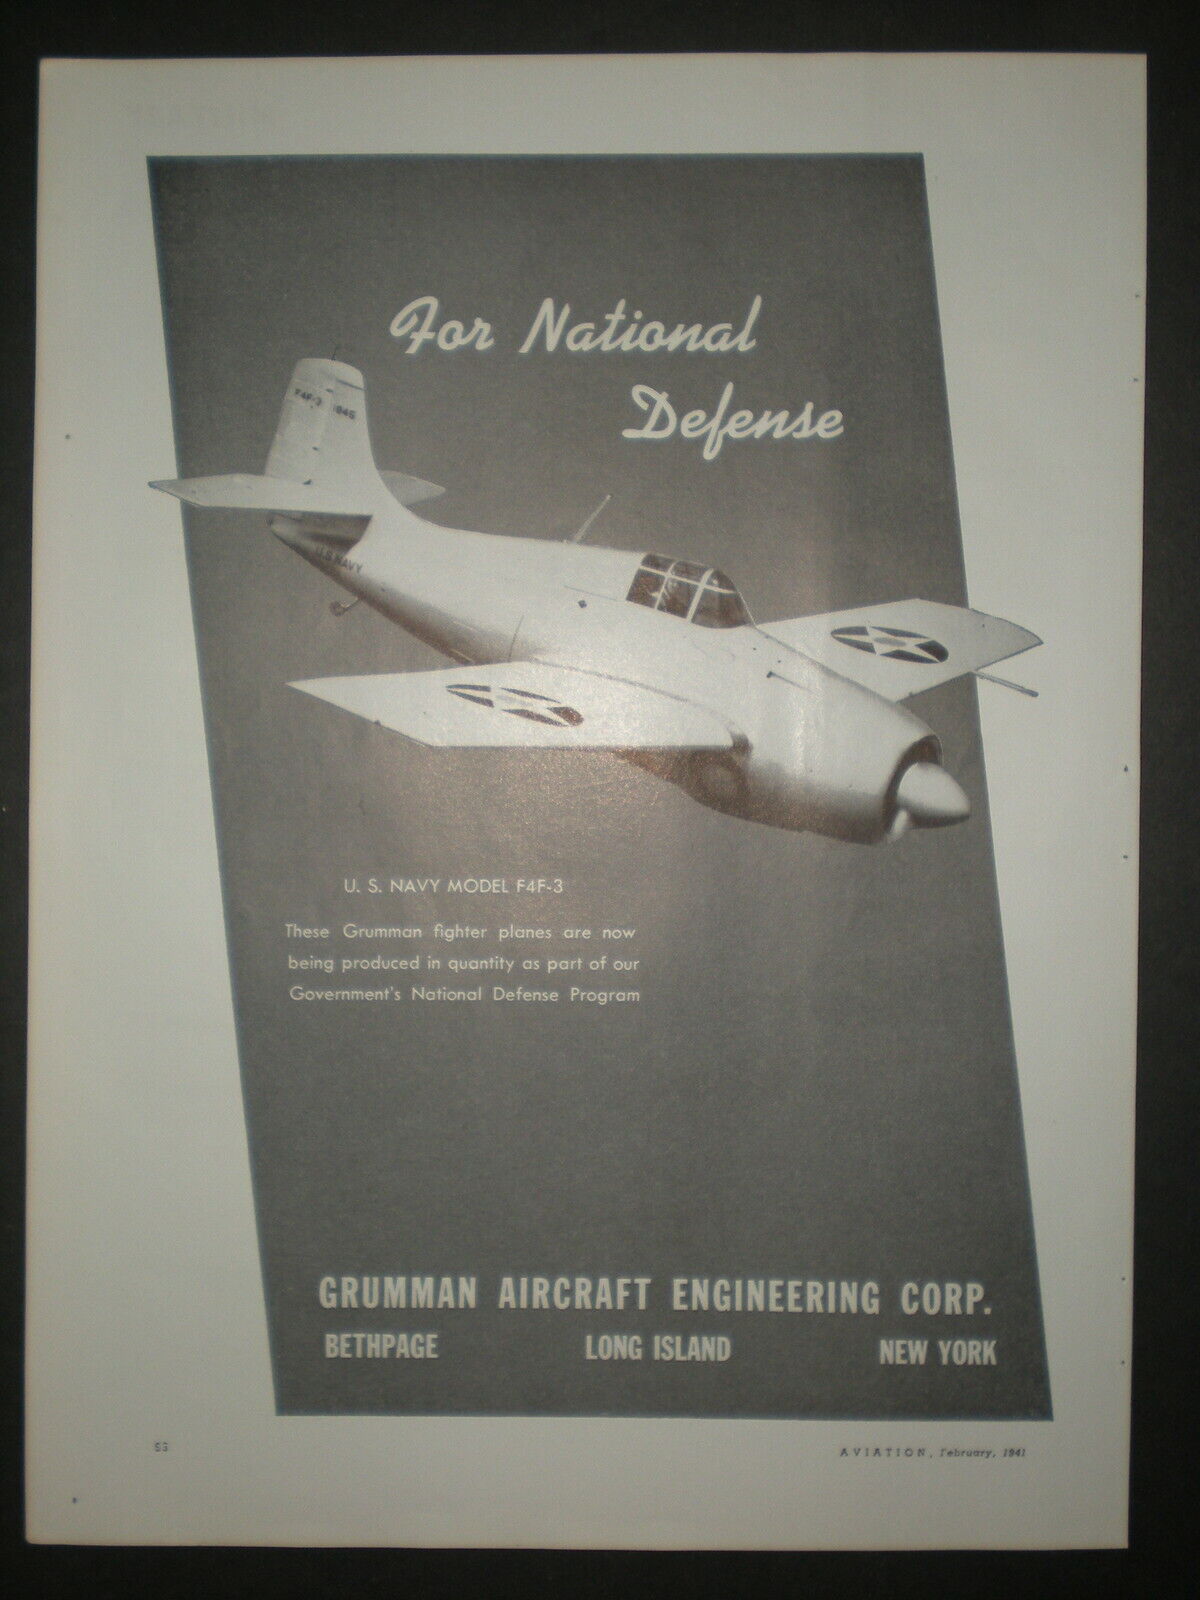 1941 GRUMMAN US NAVY F4F-3 FIGHTER PLANE WWII vintage Trade print ad